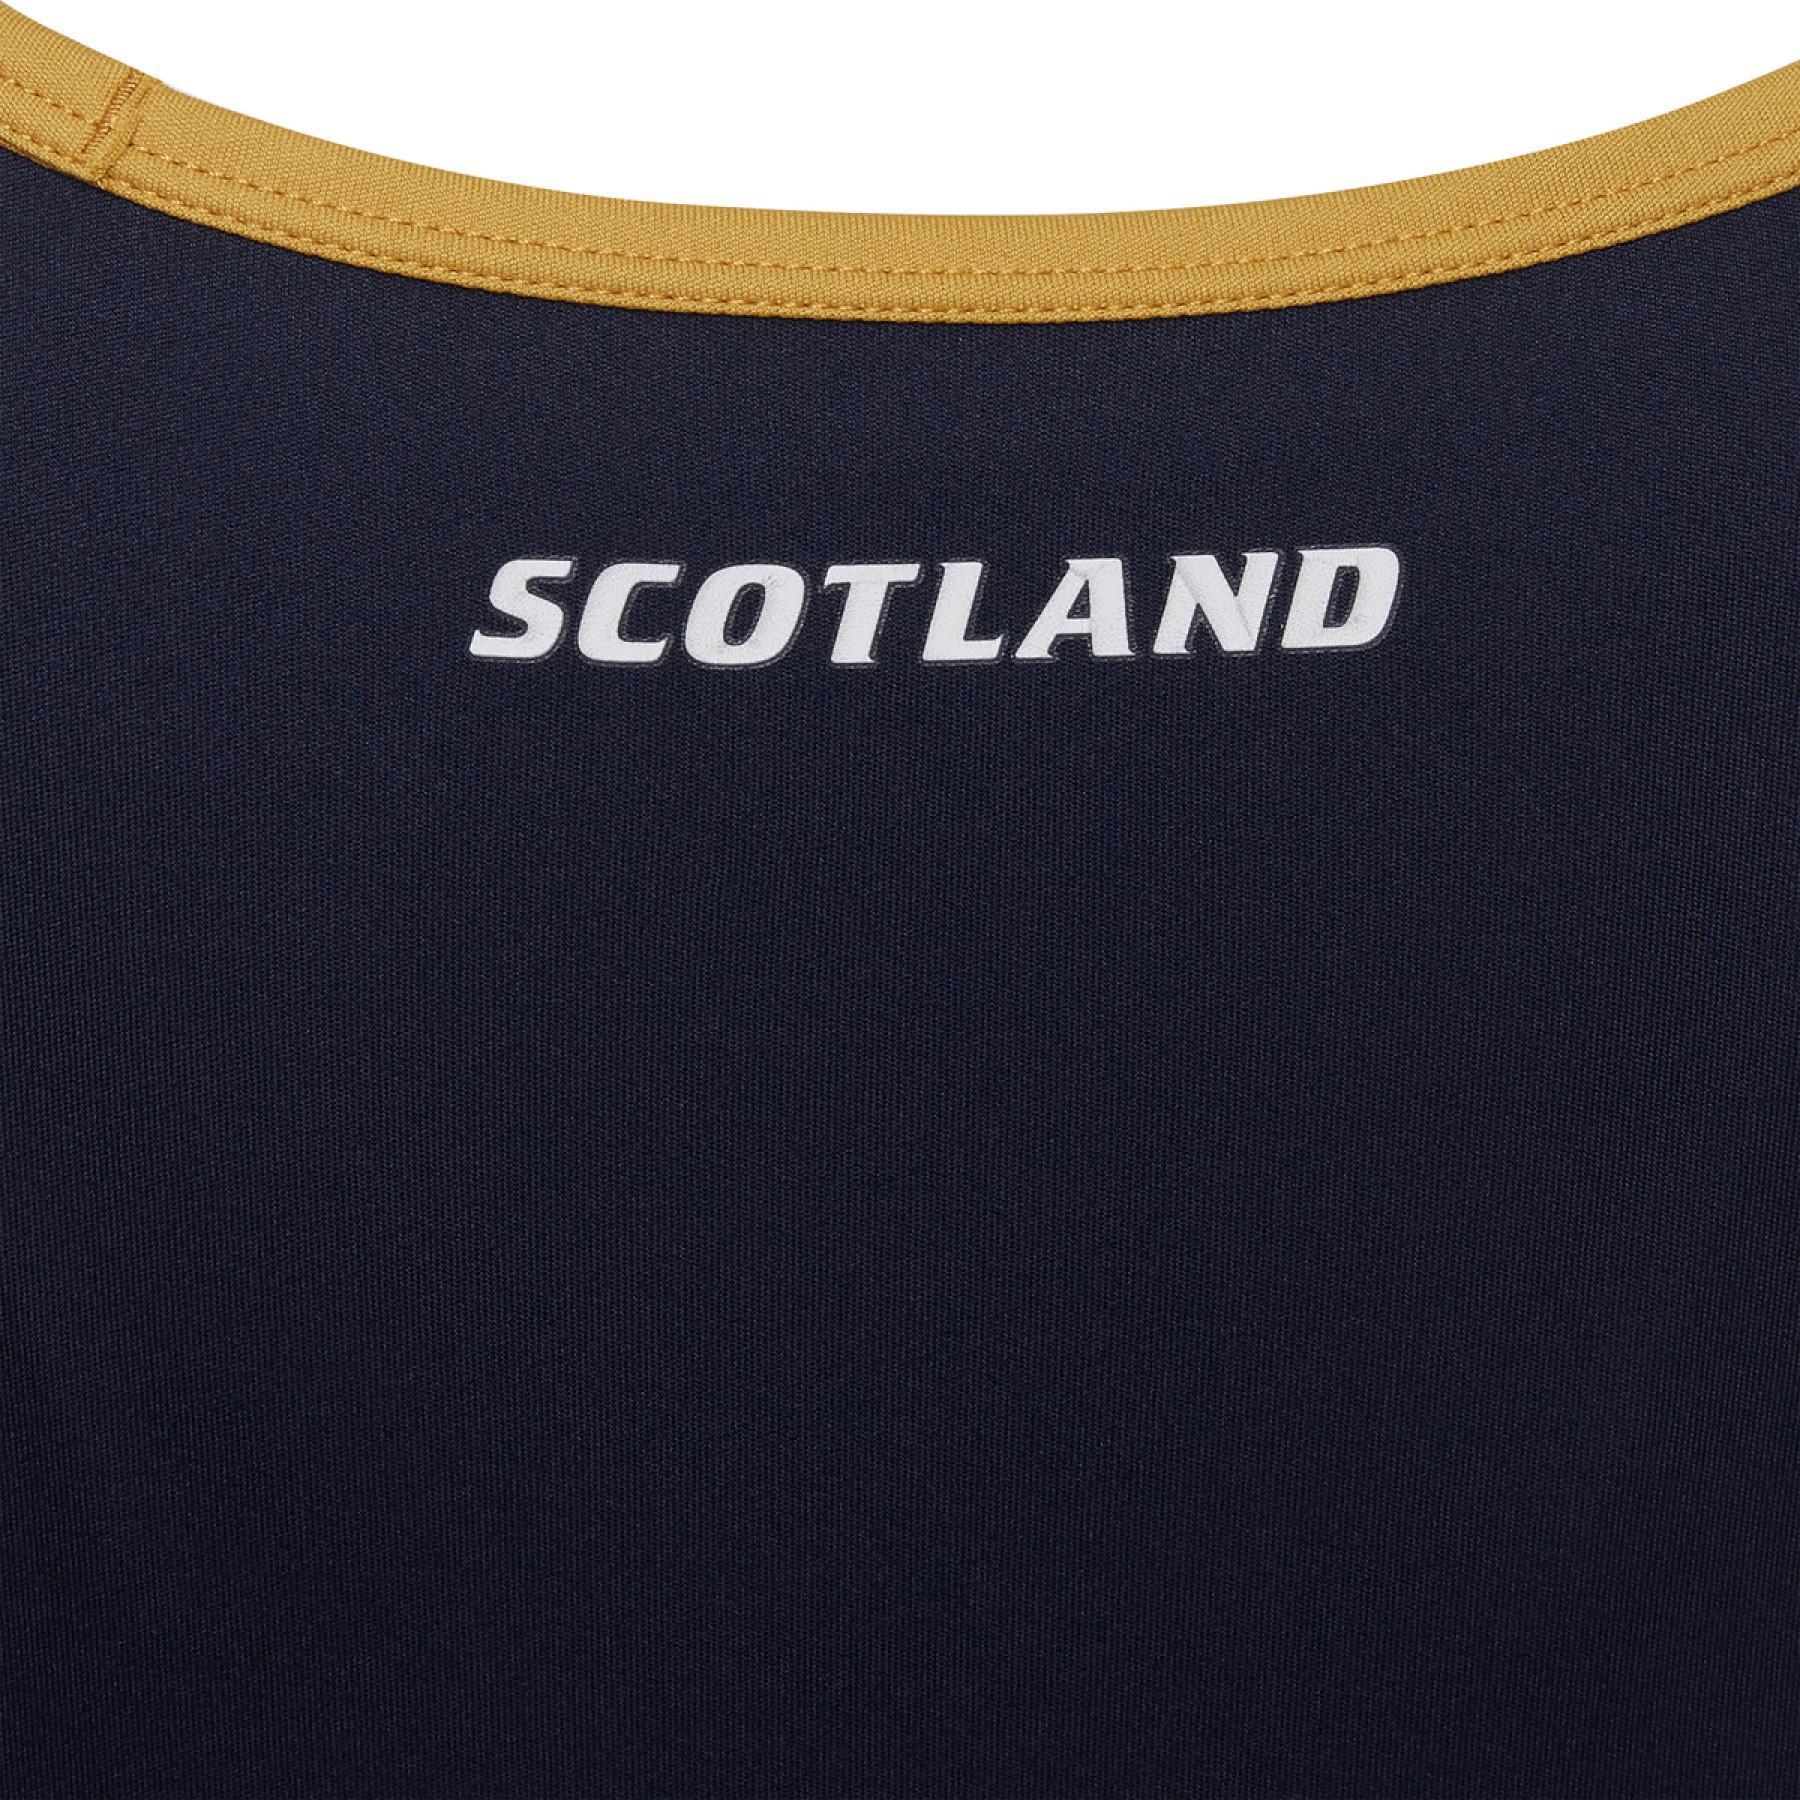 Camiseta seca de rugby de Escocia 2020/21